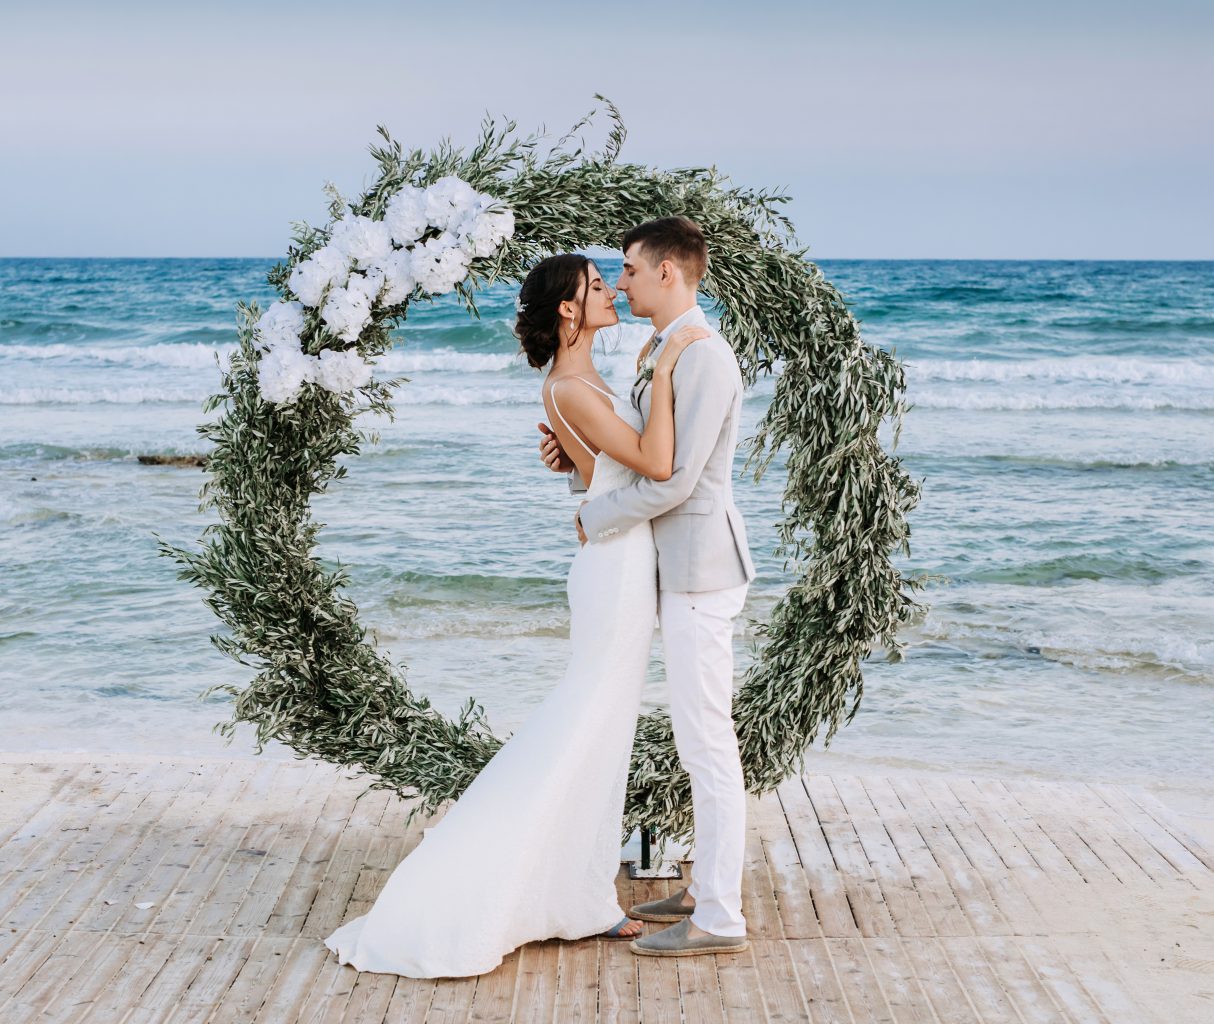 Sirens beach. Ваша свадьба на Кипре под шум морских волн!